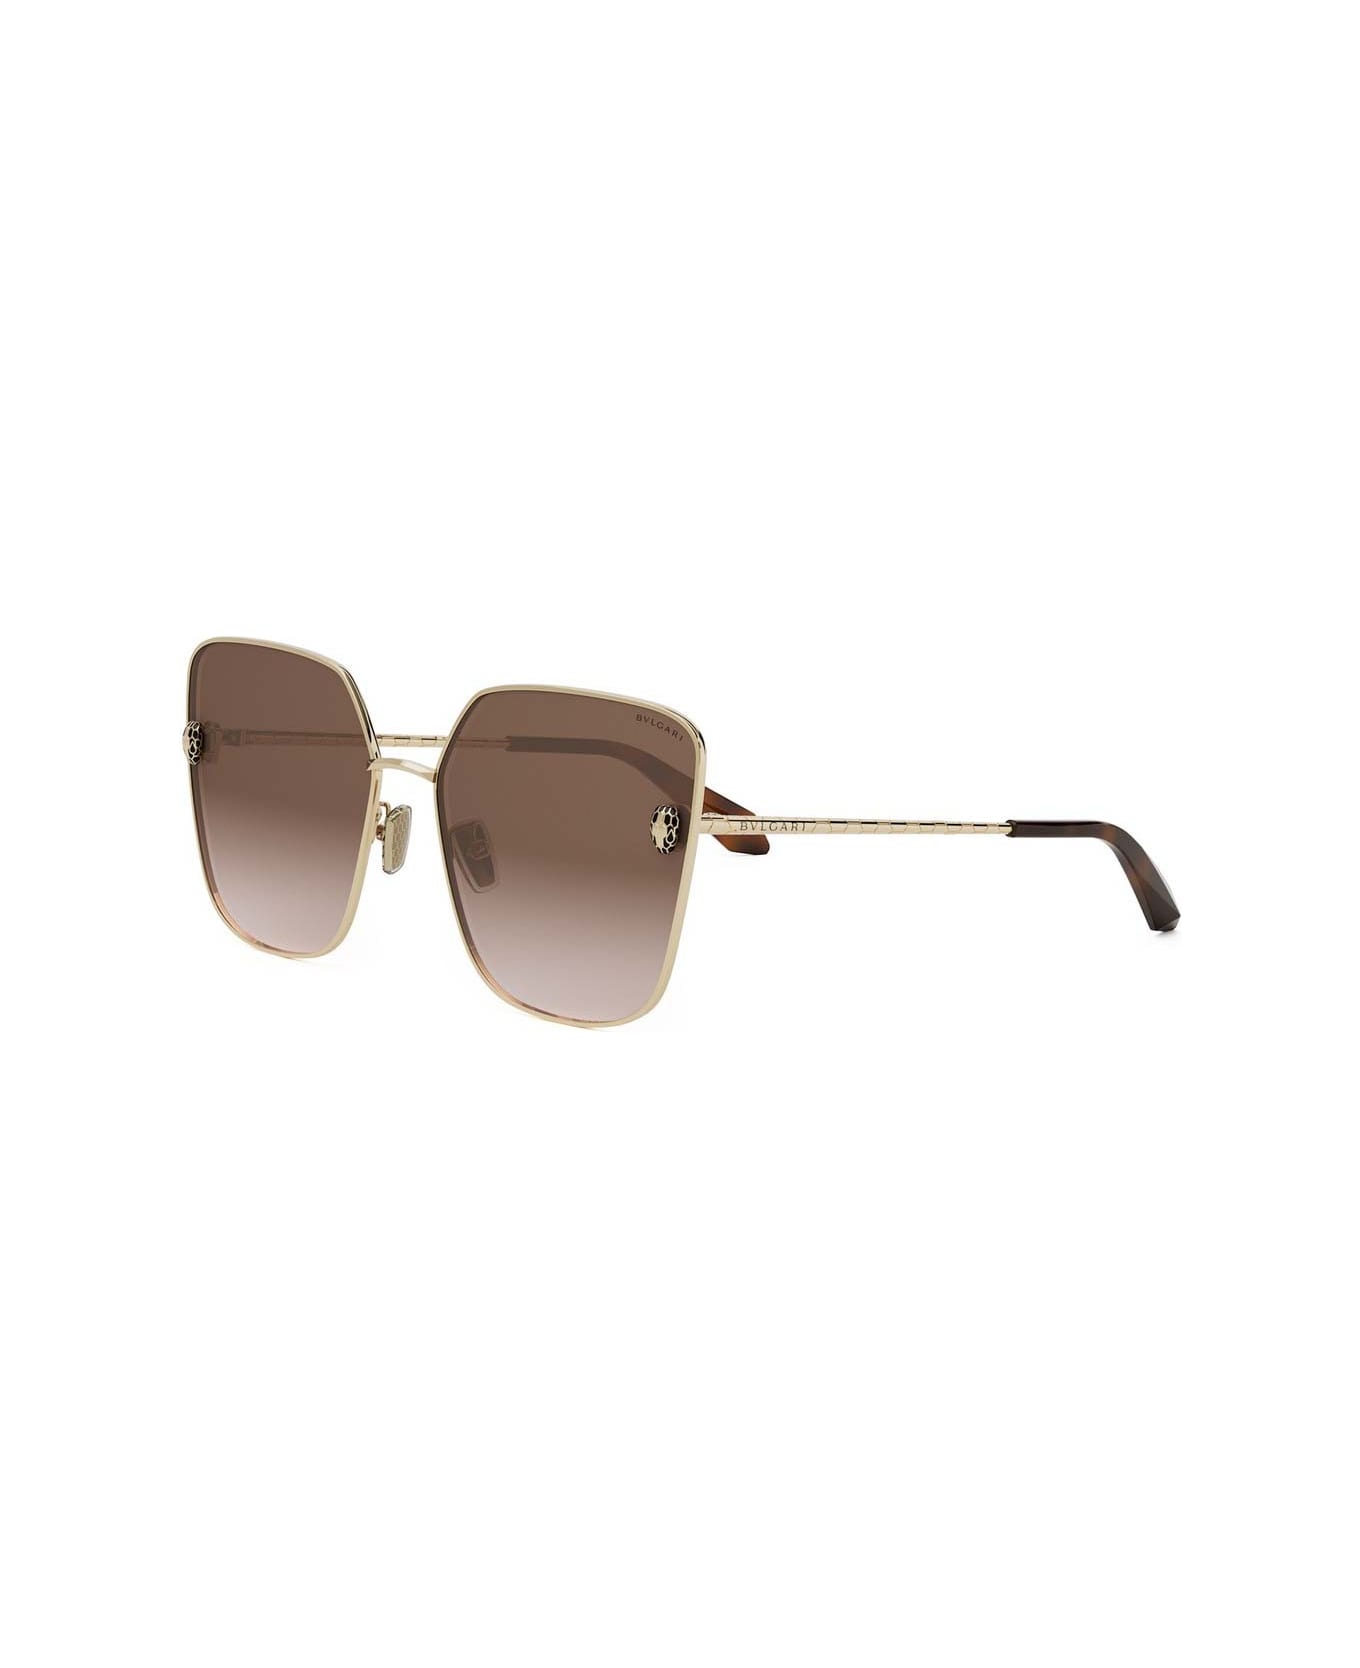 Bulgari Sunglasses - Oro/Marrone